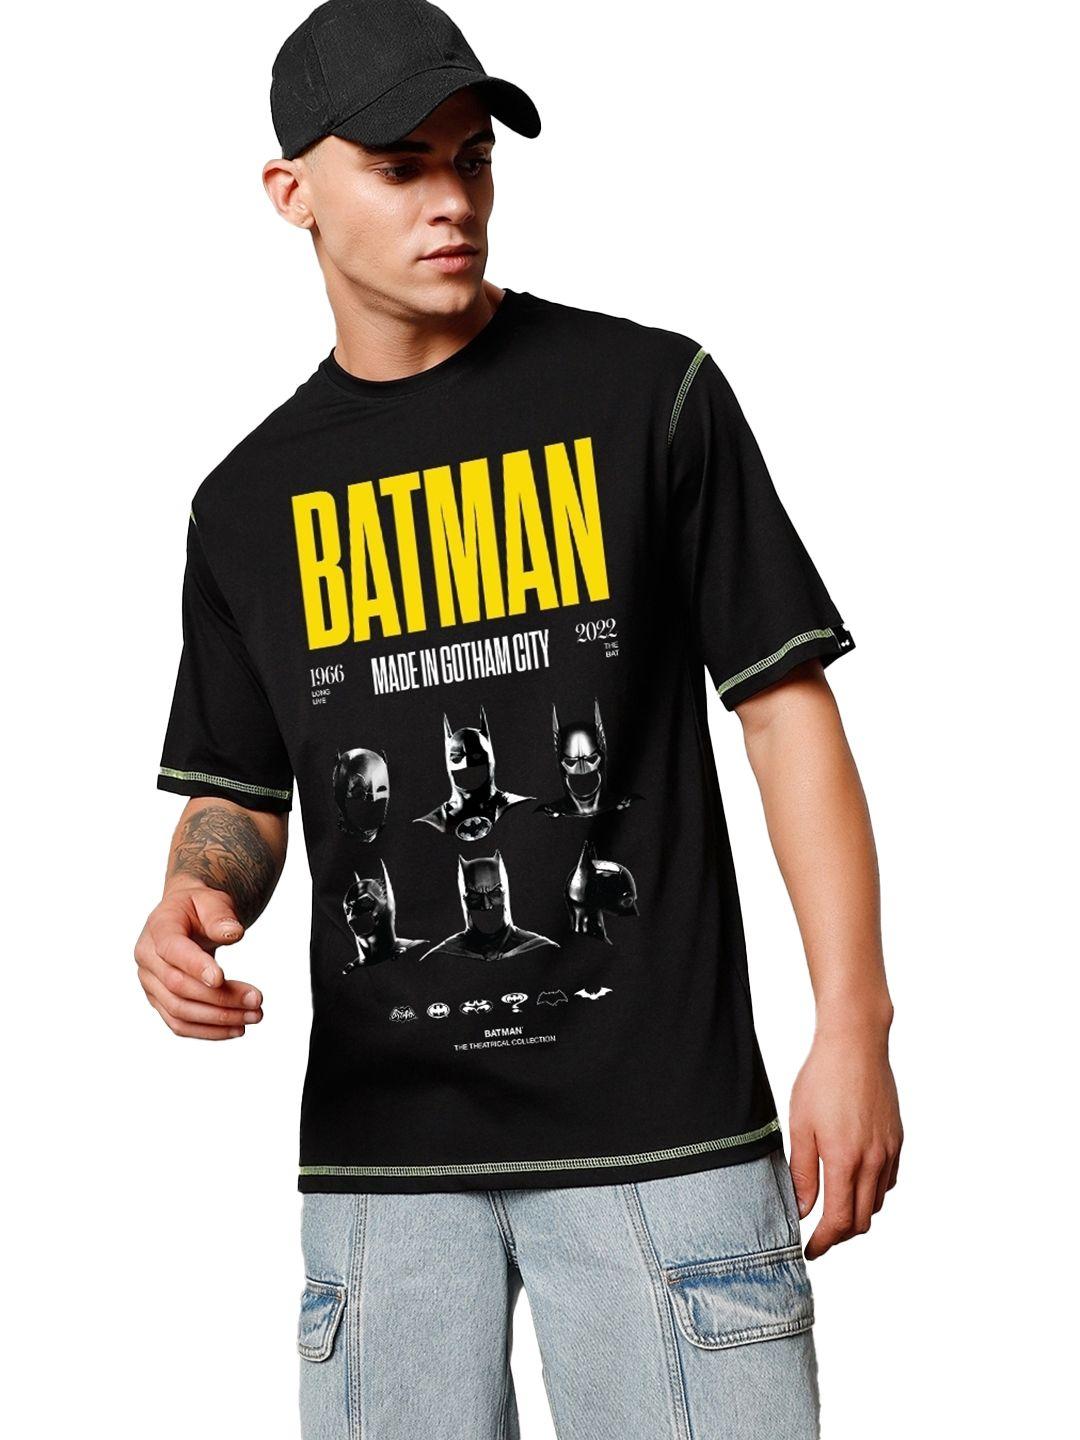 bewakoof-batman-superhero-printed-cotton-t-shirt